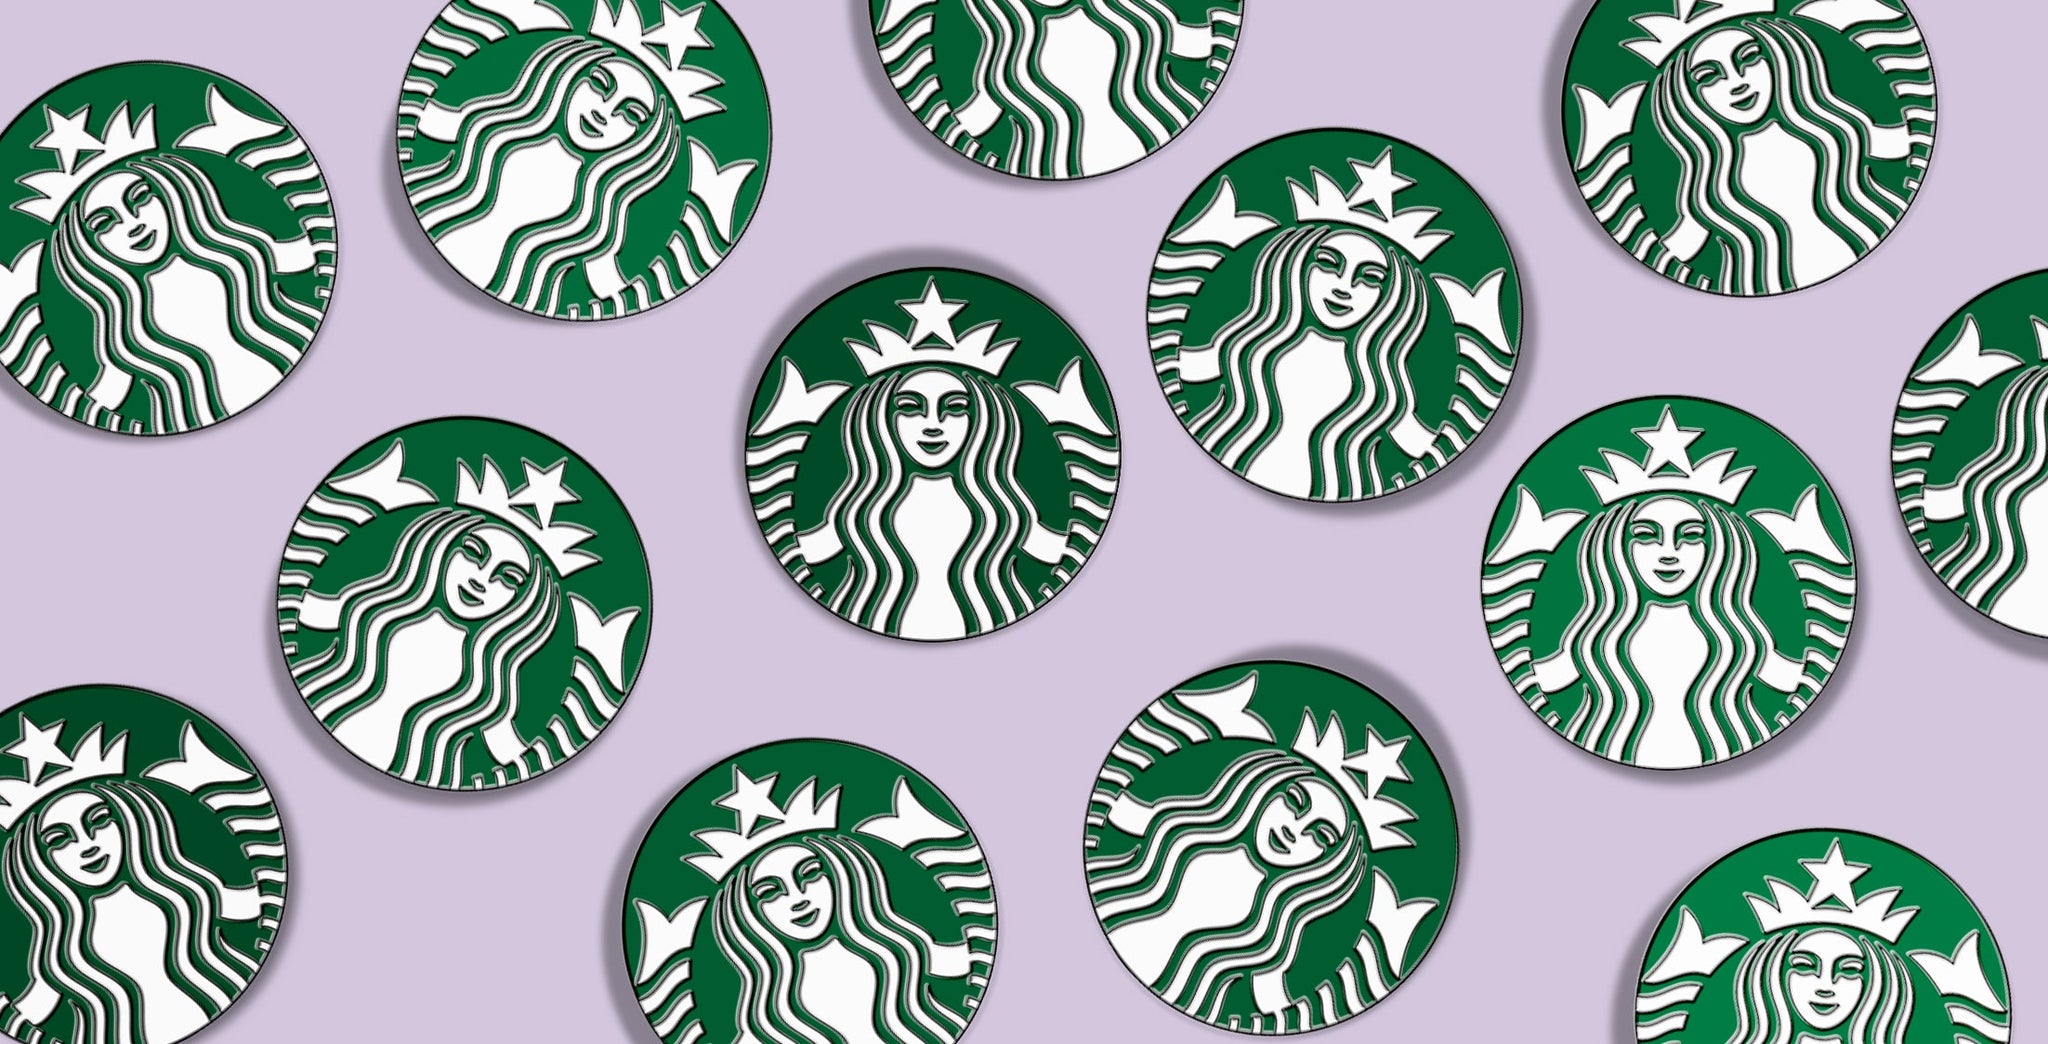 Starbucks Pins